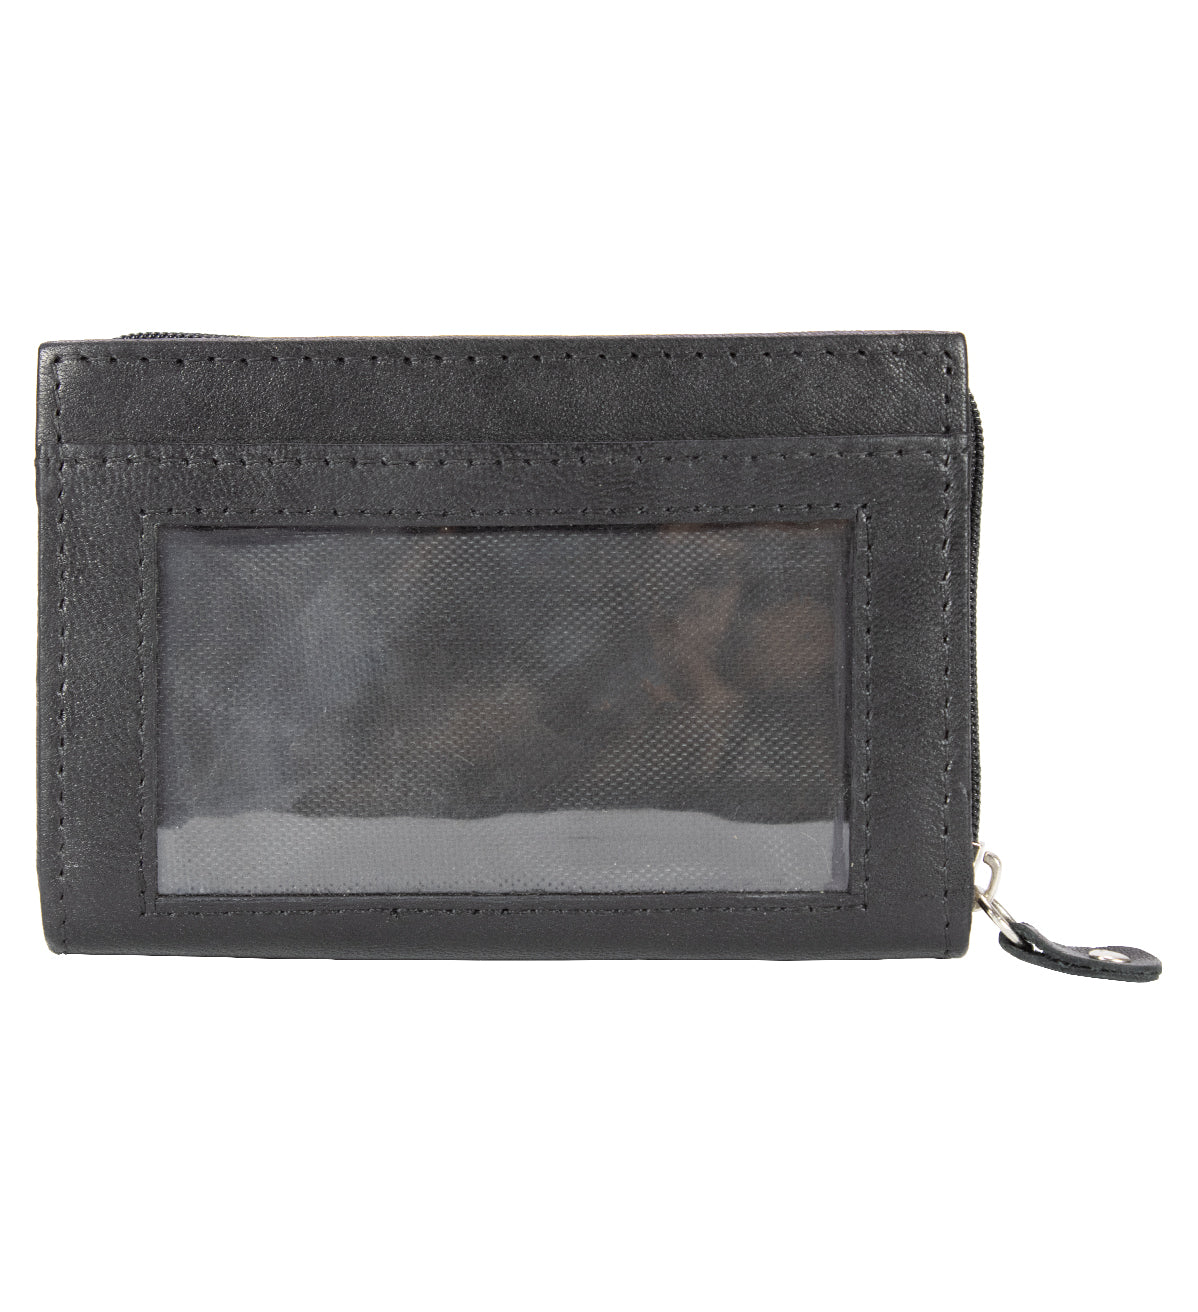 Black Leather Wallet Pocket Business Card ID Organizer Clear Sleeve Insert Zip Around